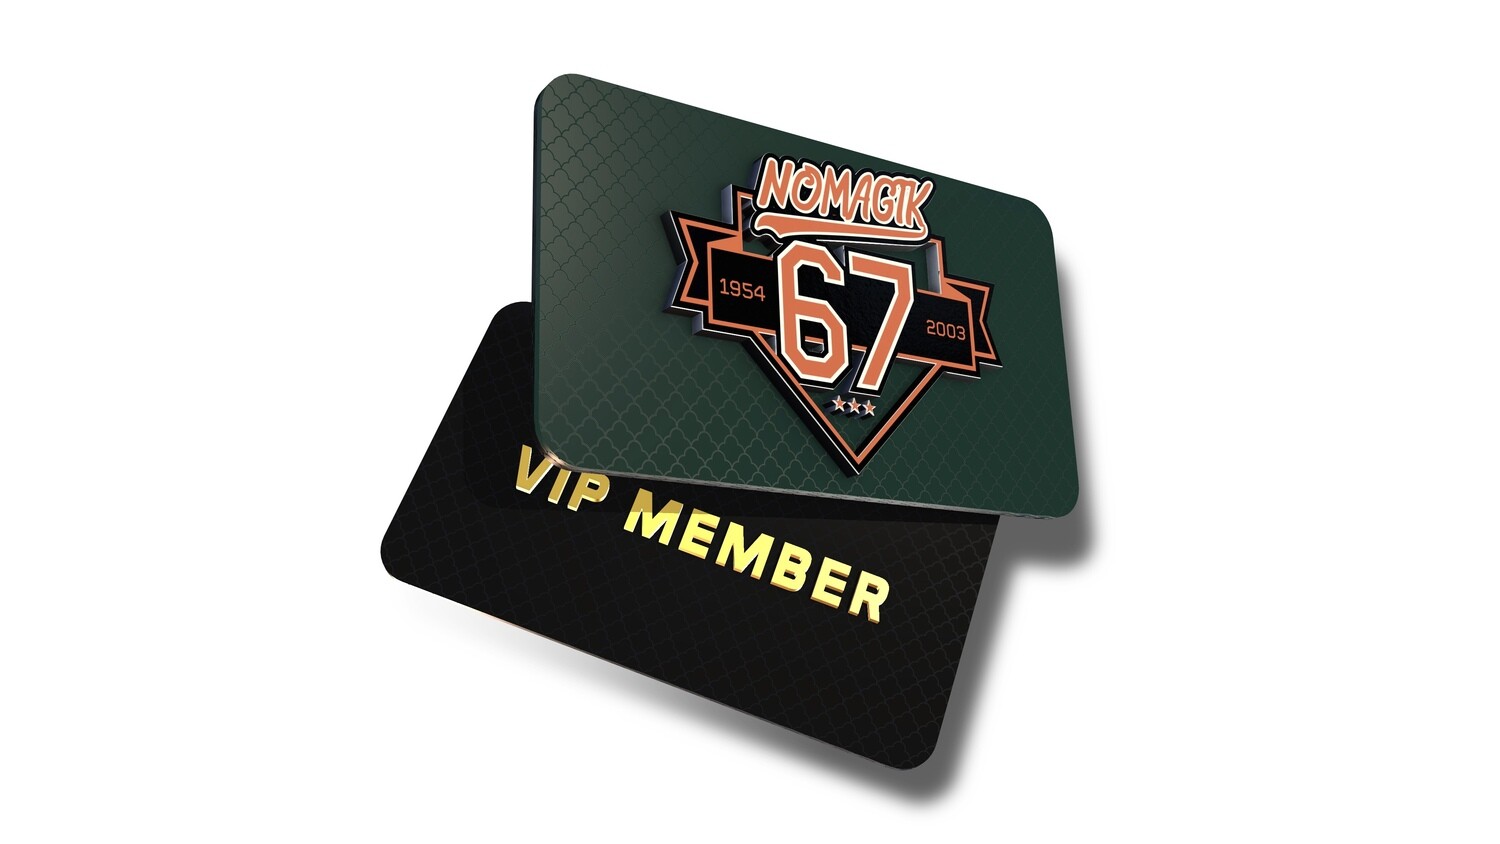 VIP MEMBERSHIP RENEWAL (for expired memberships only)